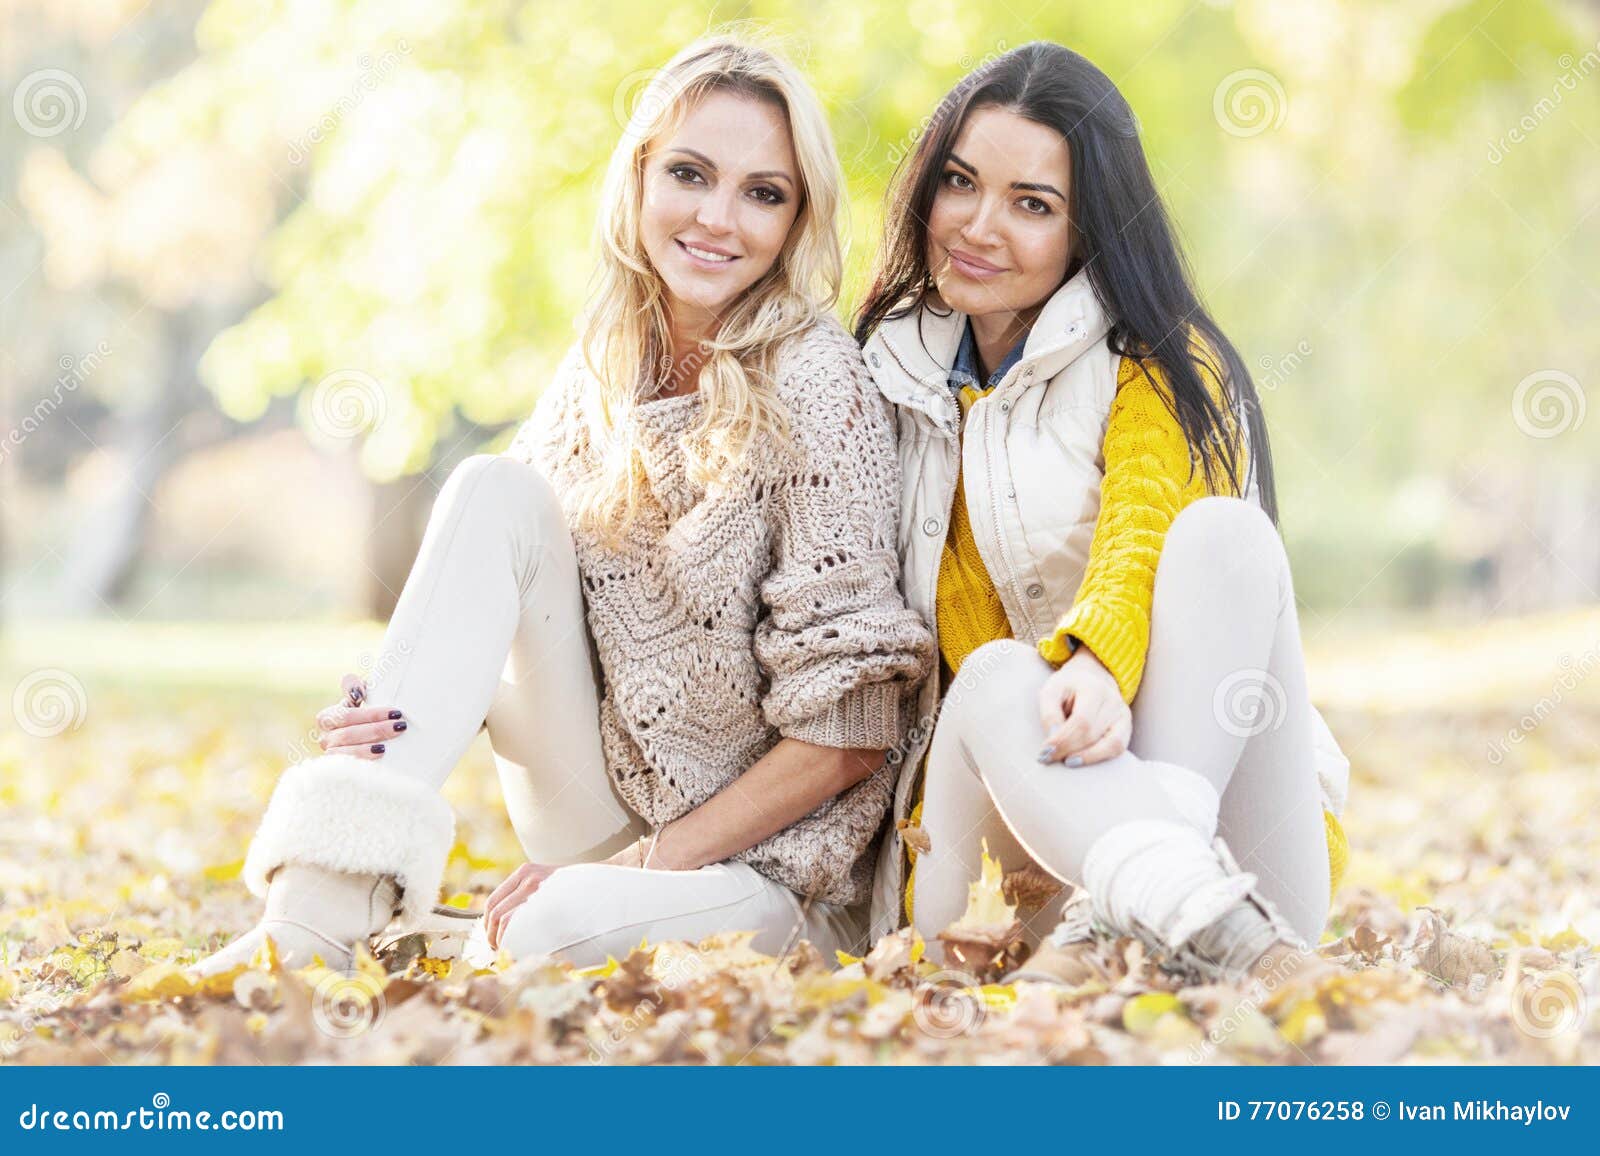 Women Sitting in Autumn Park Stock Photo - Image of beautiful ...